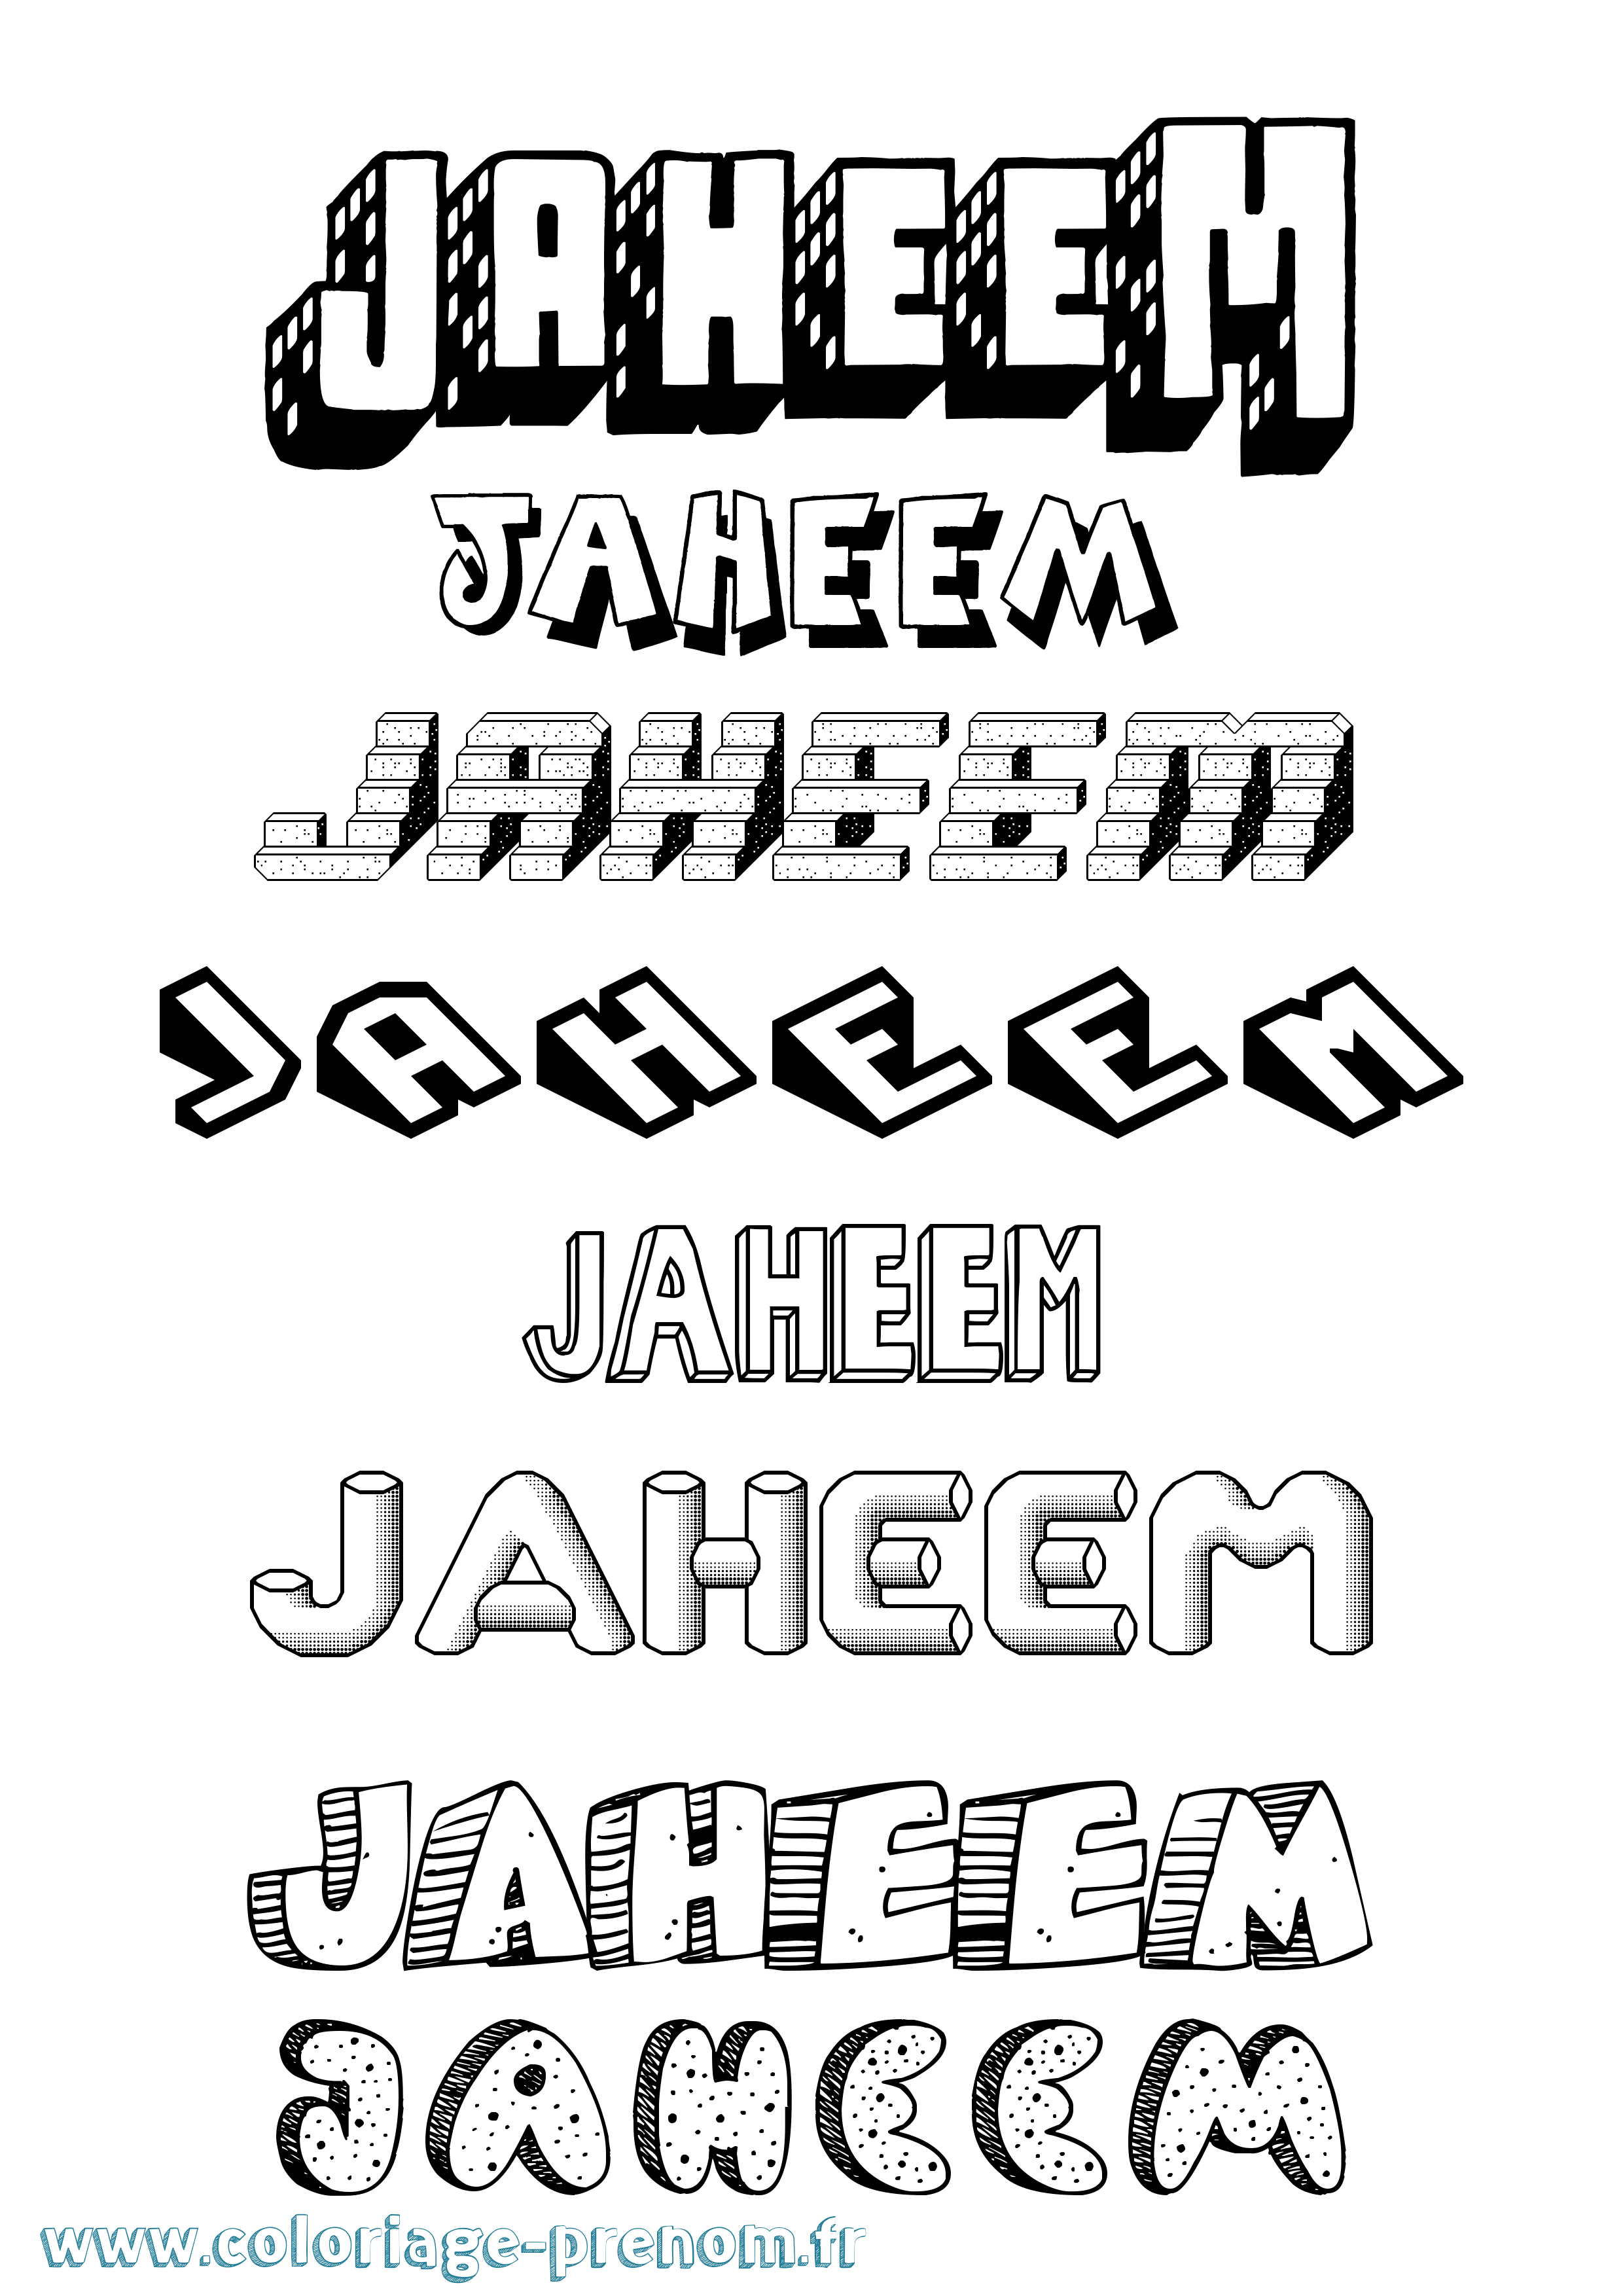 Coloriage prénom Jaheem Effet 3D